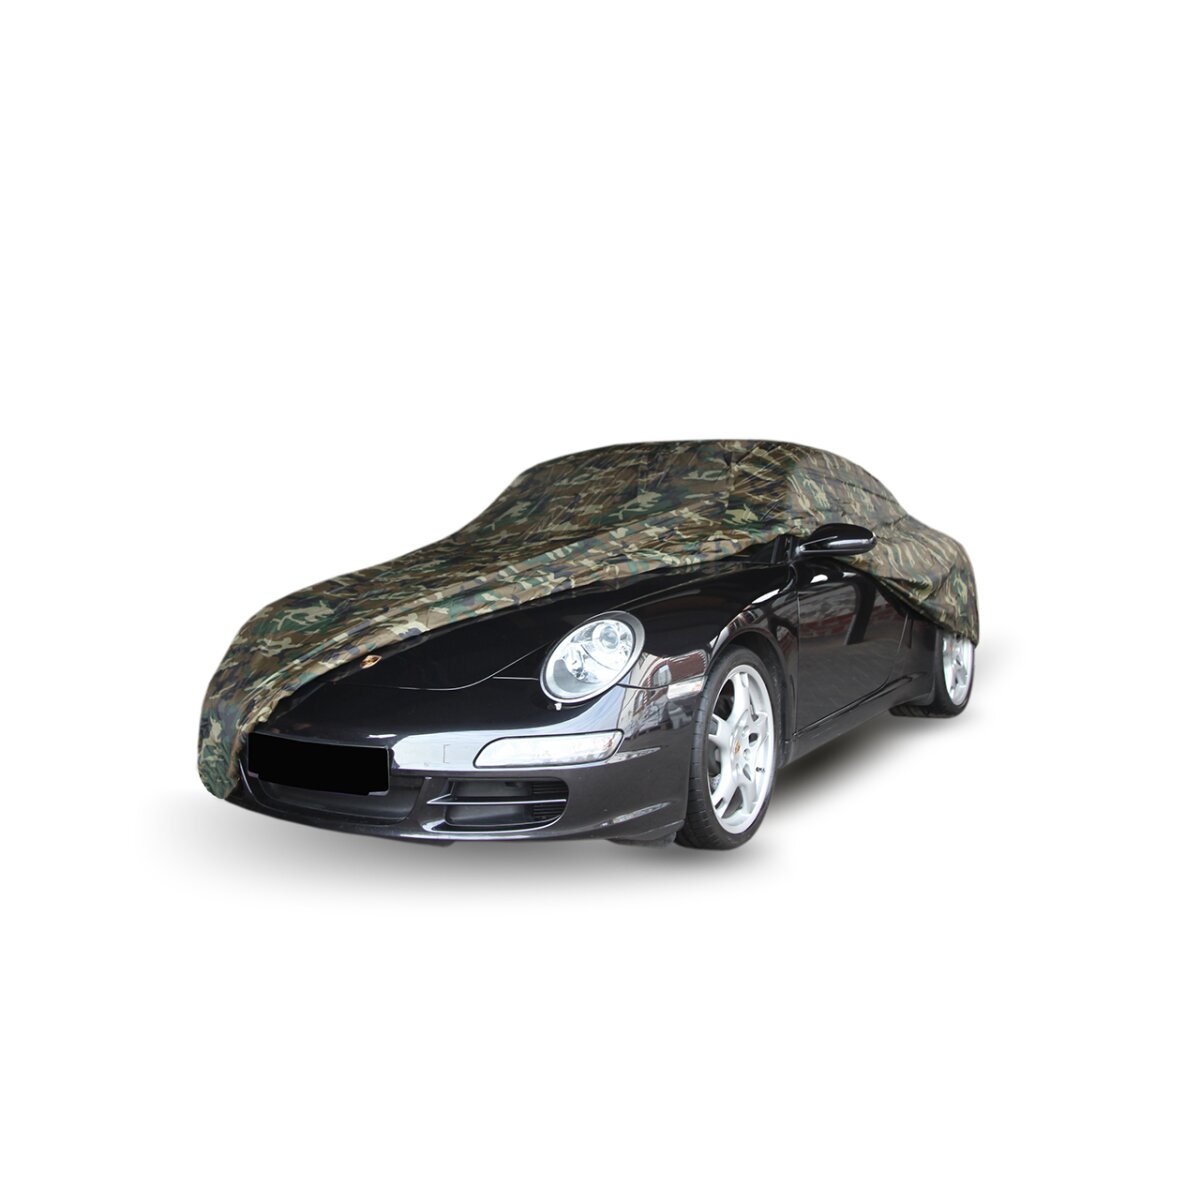 Autoabdeckung Car Cover Camouflage für Audi A3 Cabriolet (8P), 65,00 €